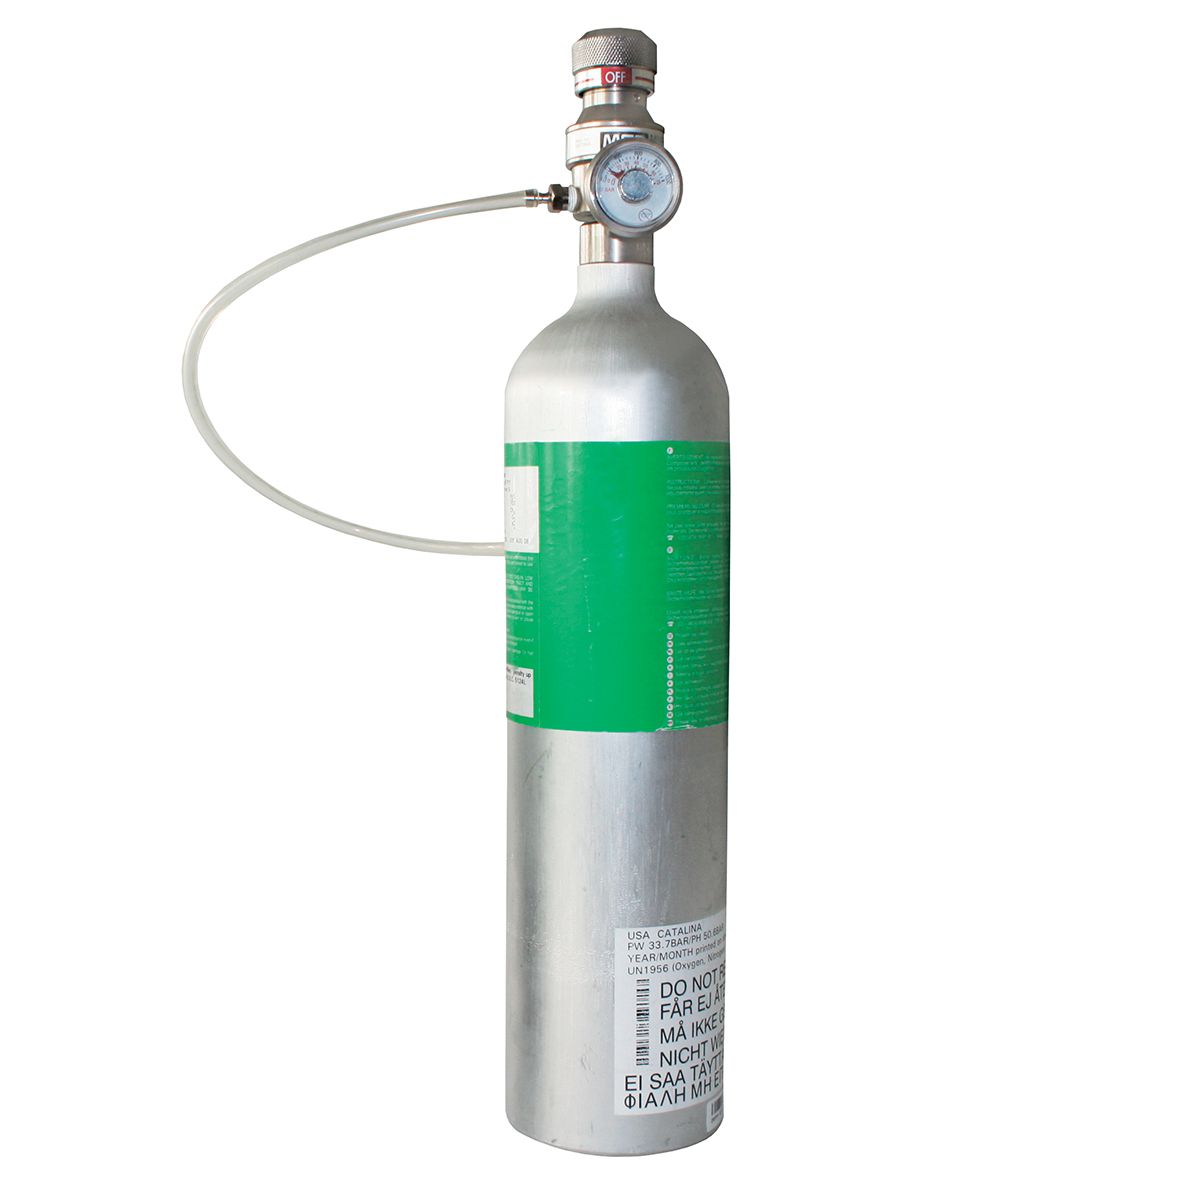 MSA Mischgasflasche 58 L - 0,4 Vol% C3H8, 60 ppm CO, 20 ppm H2S in Luft